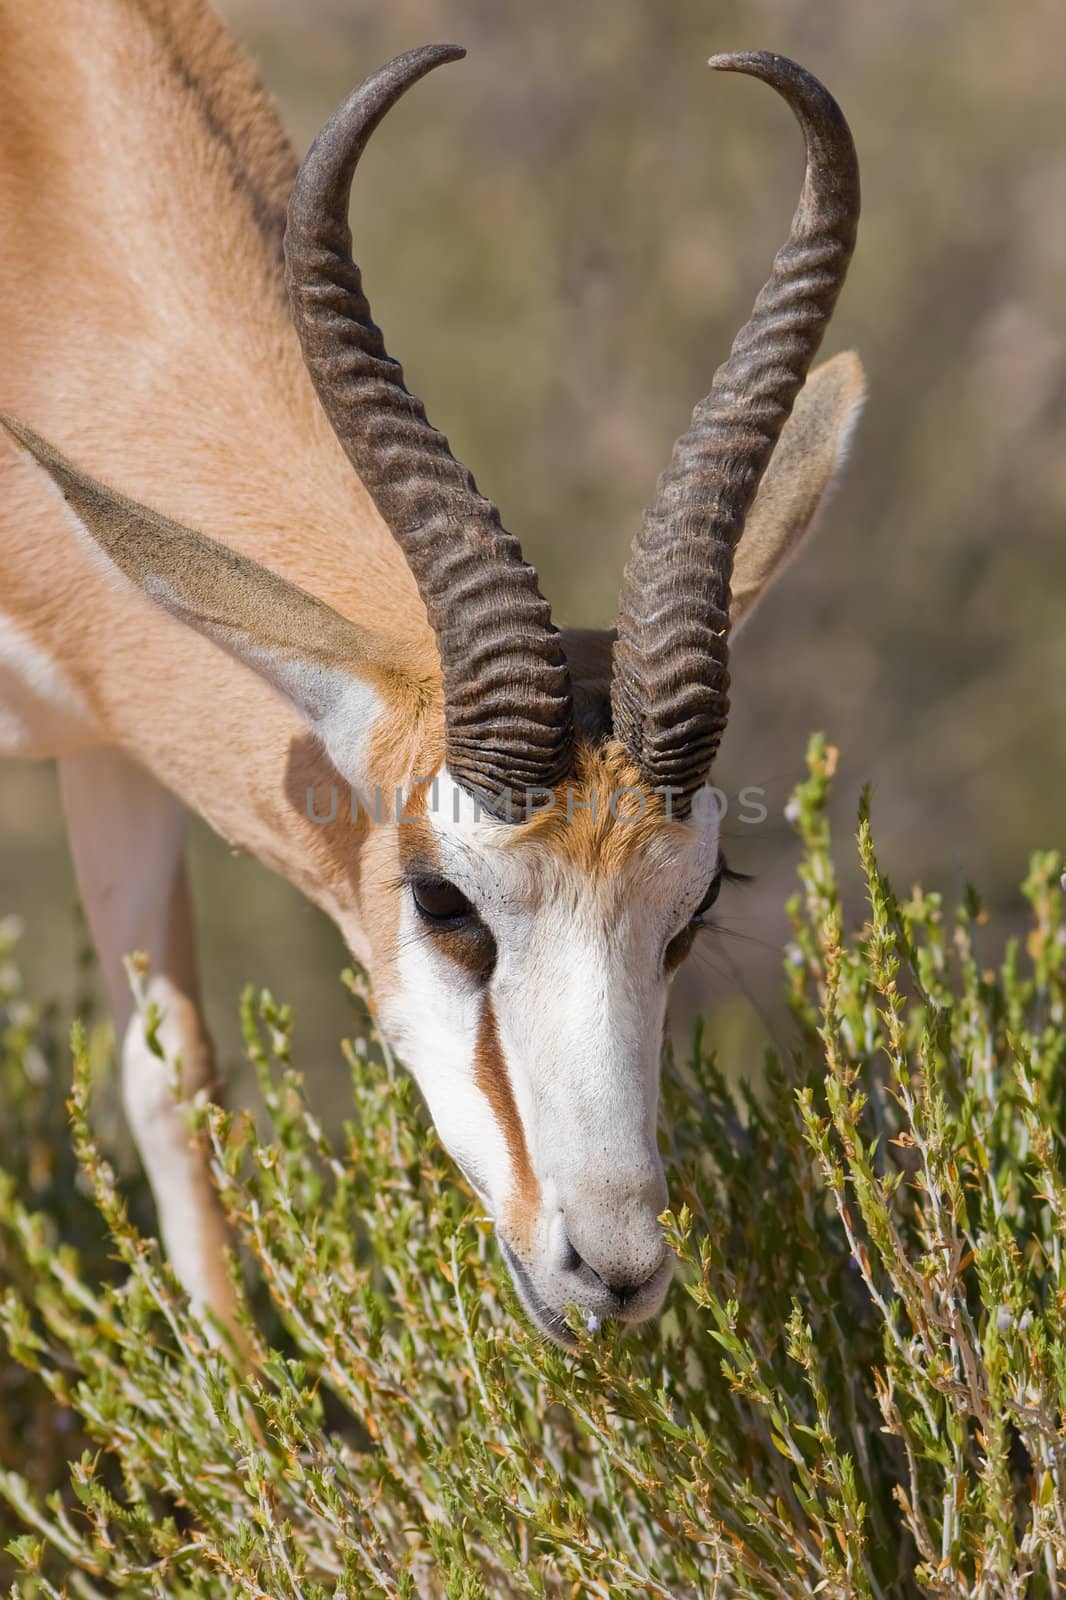 Springbok feeding by nightowlza